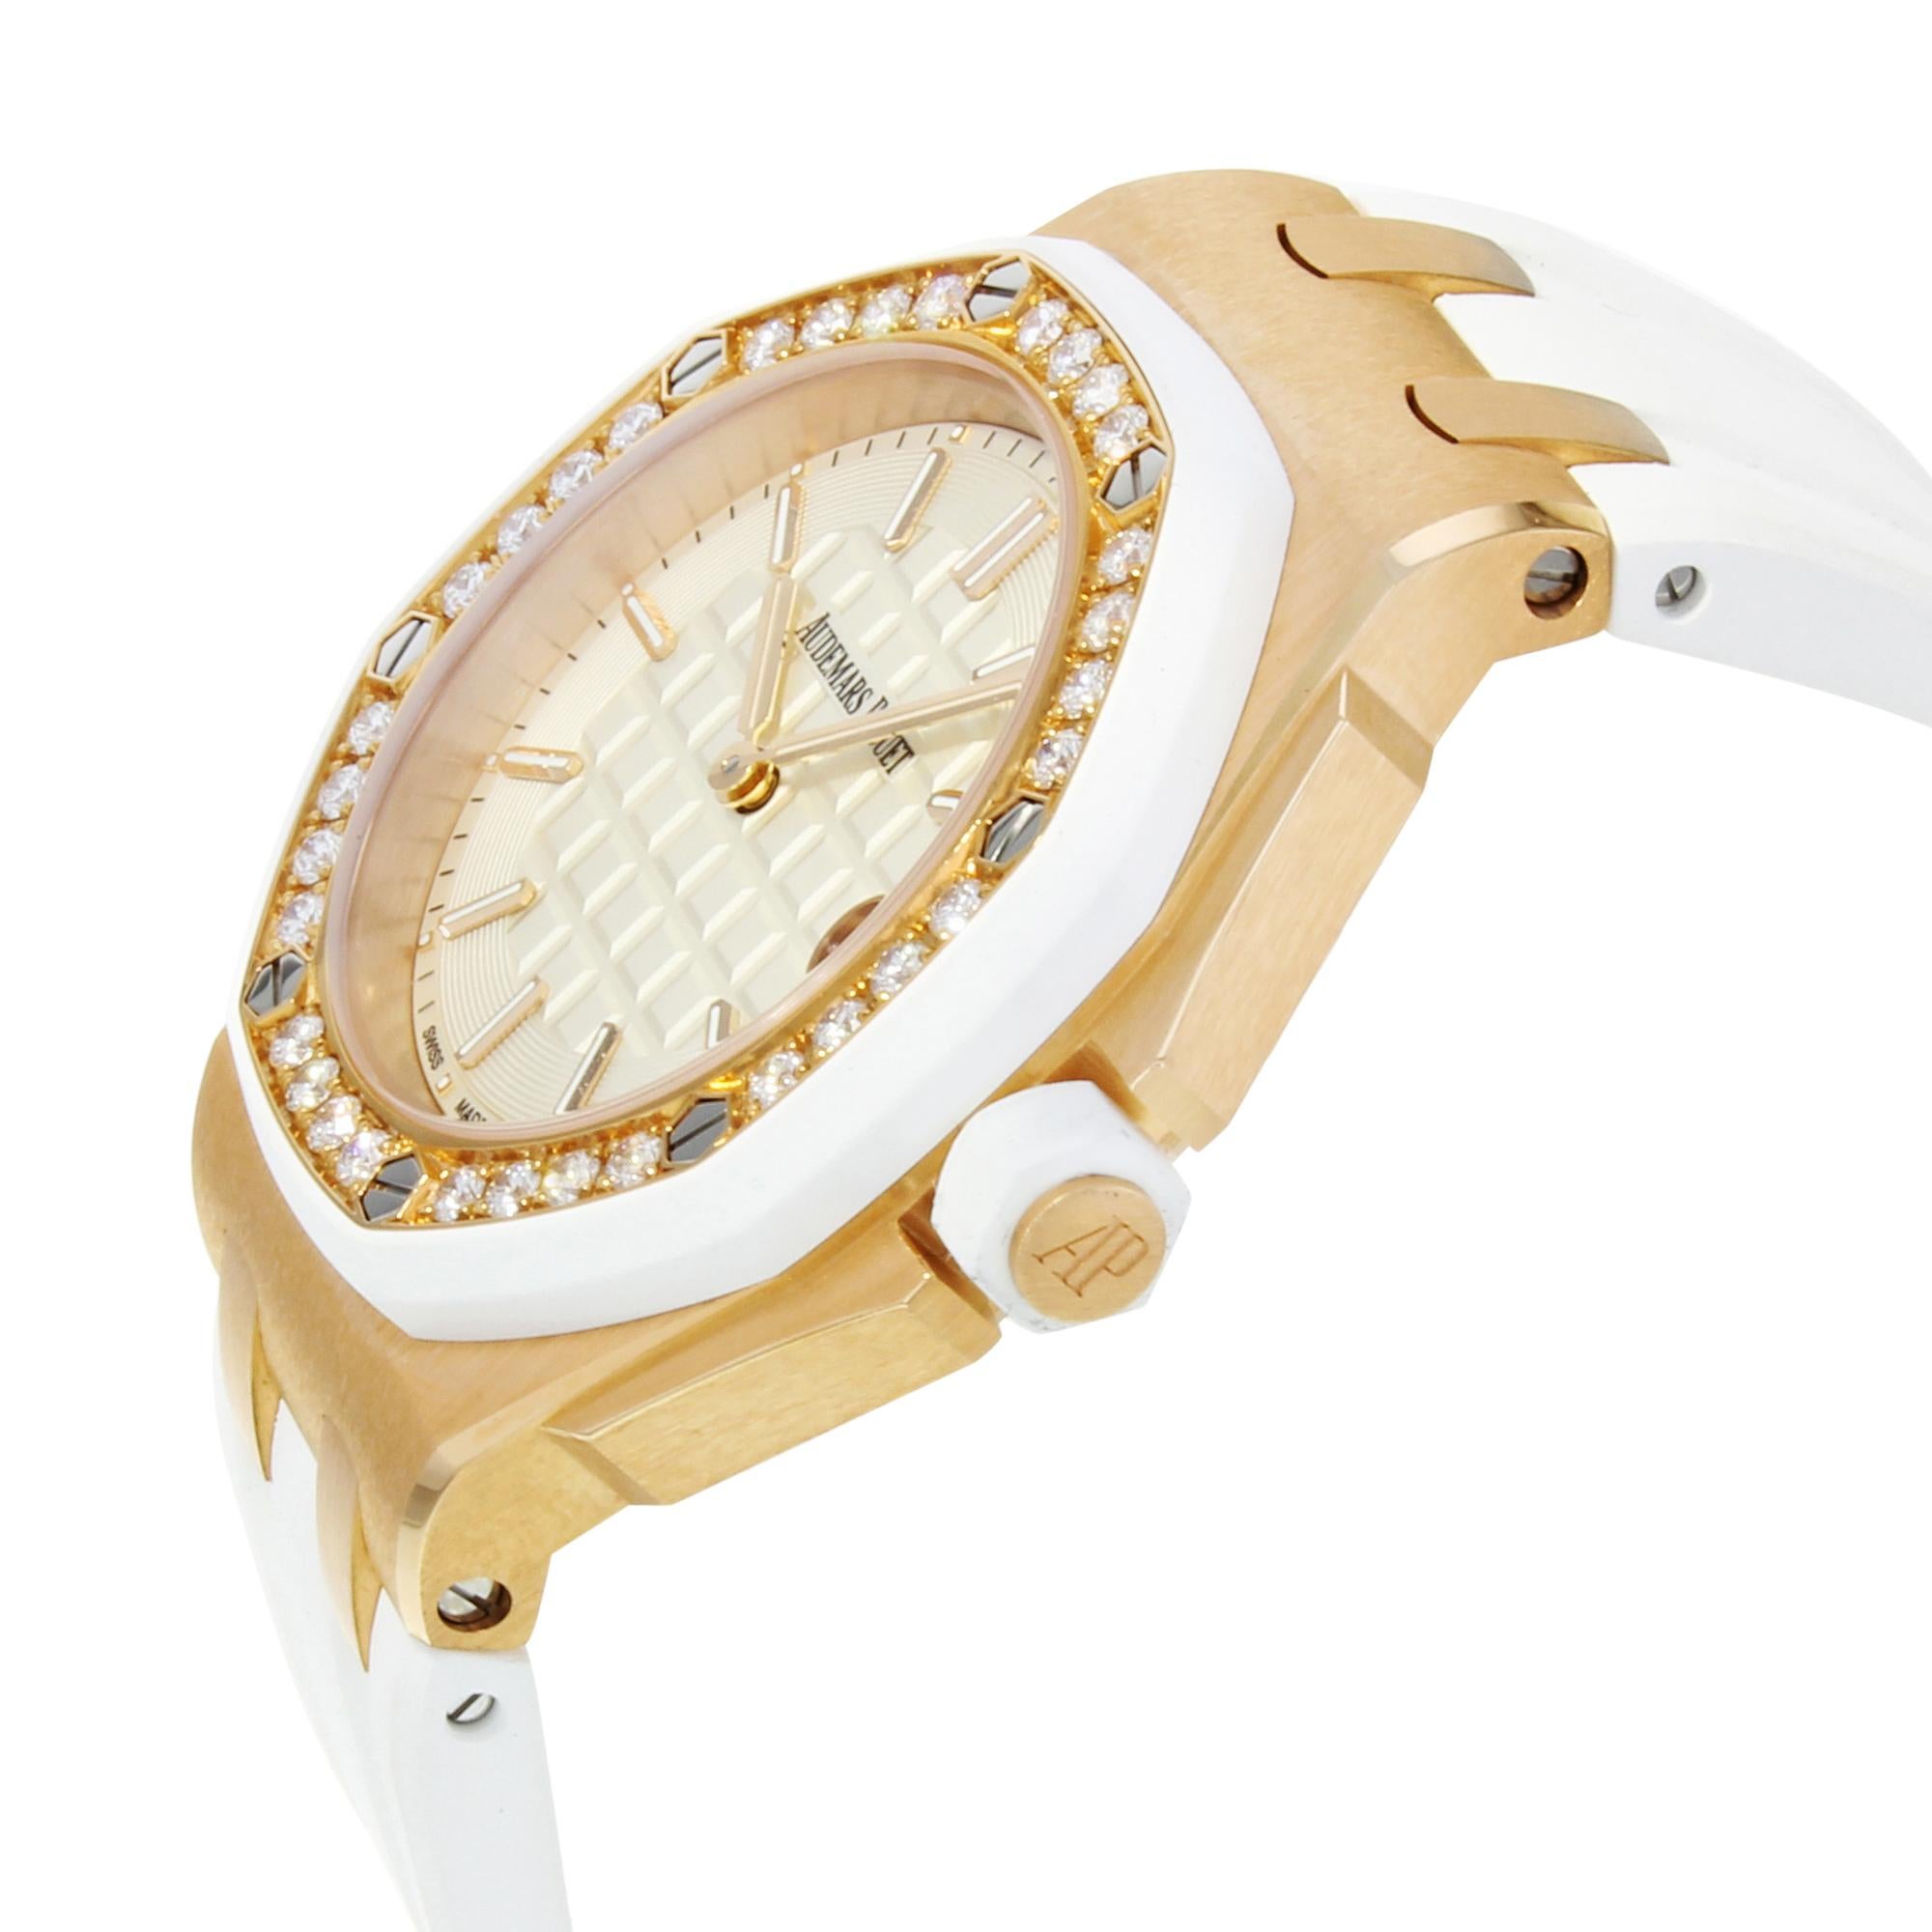 Audemars Piguet Royal Oak Offshore 67540ok. zz. a010ca. 01 18 Karat Gold Watch In New Condition In New York, NY